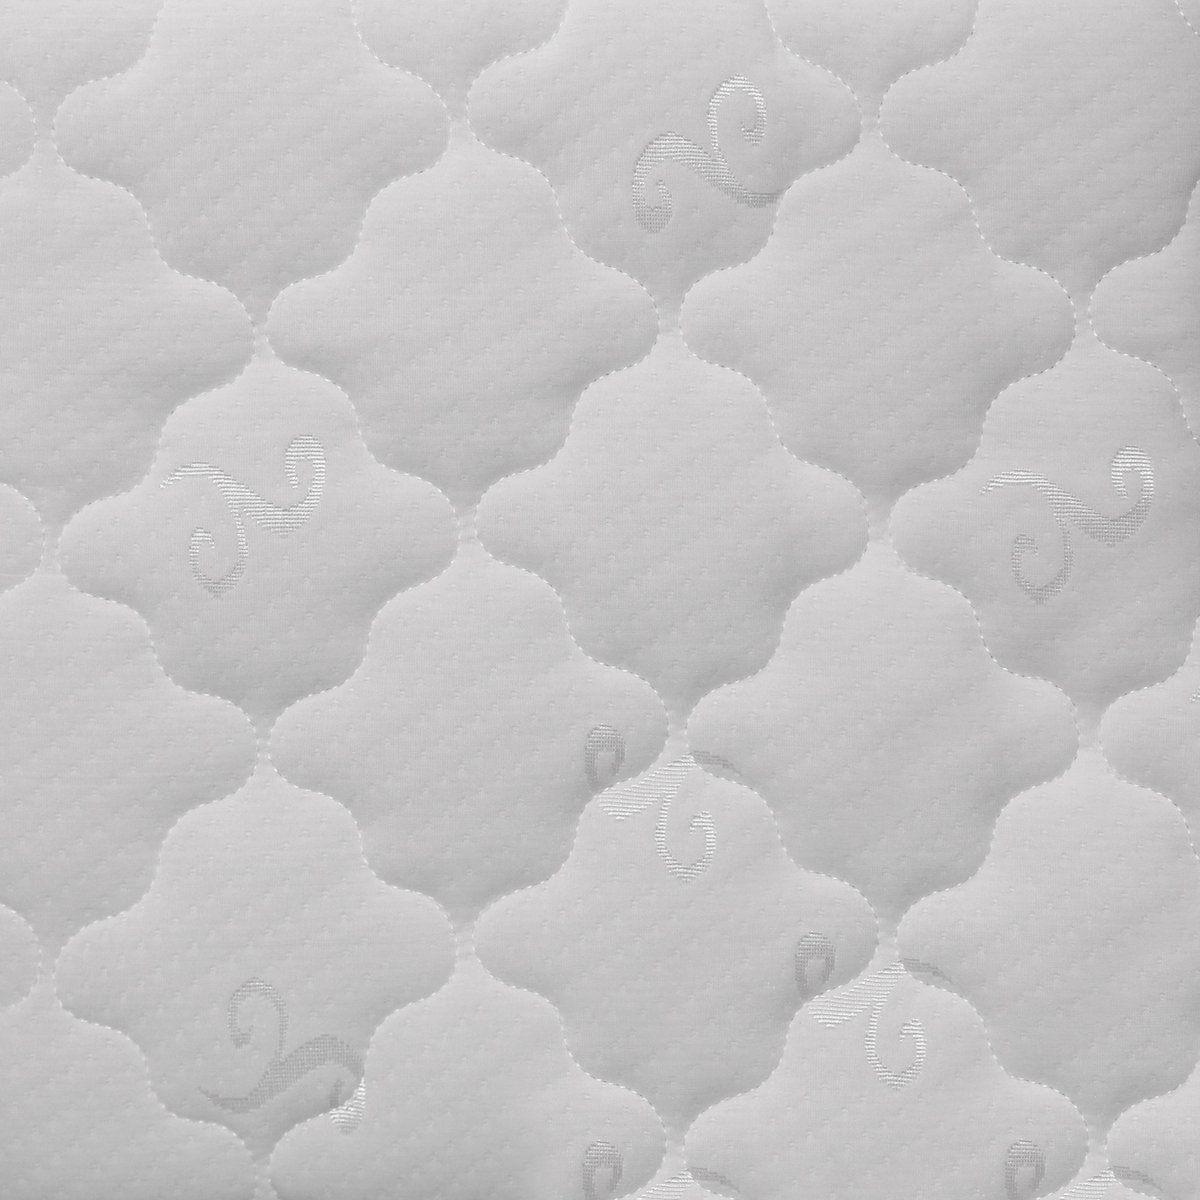 Cotton Home Imperial Pocket Spring Mattress 150x200+30cm-Pillow Top